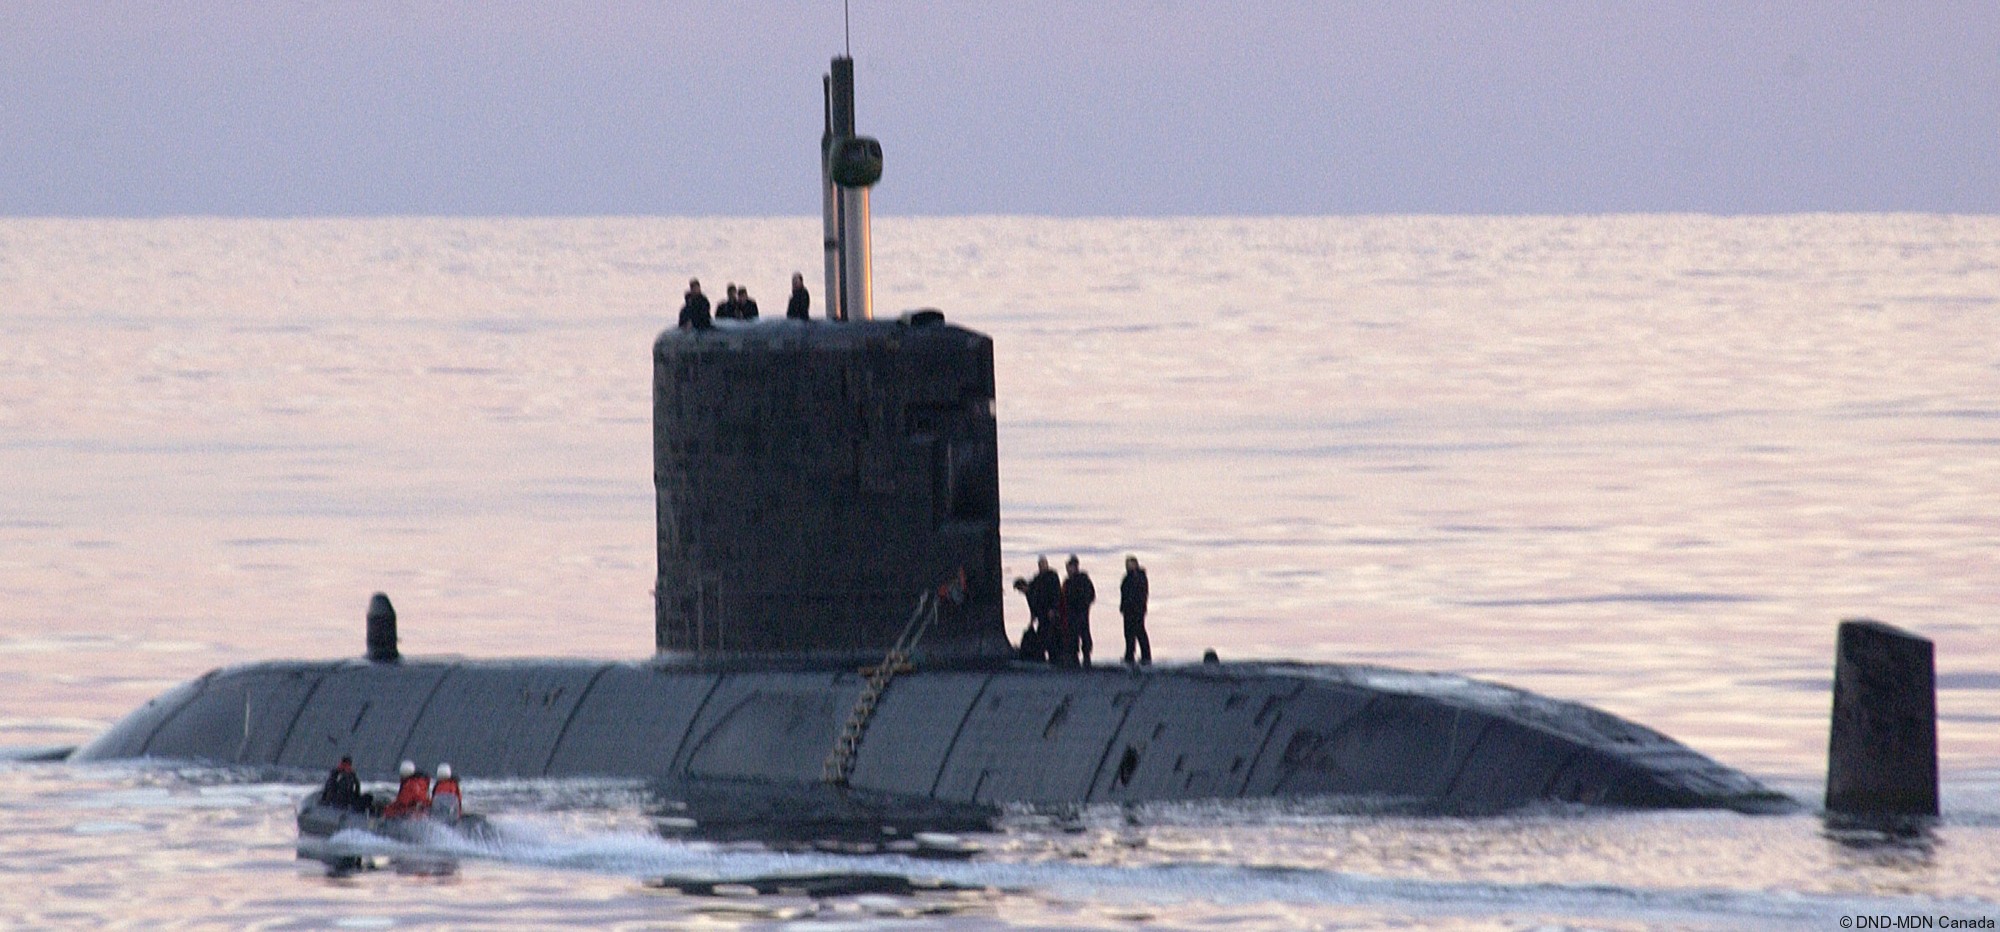 ssk-877 hmcs windsor victoria upholder class attack submarine hunter killer ncsm royal canadian navy 12